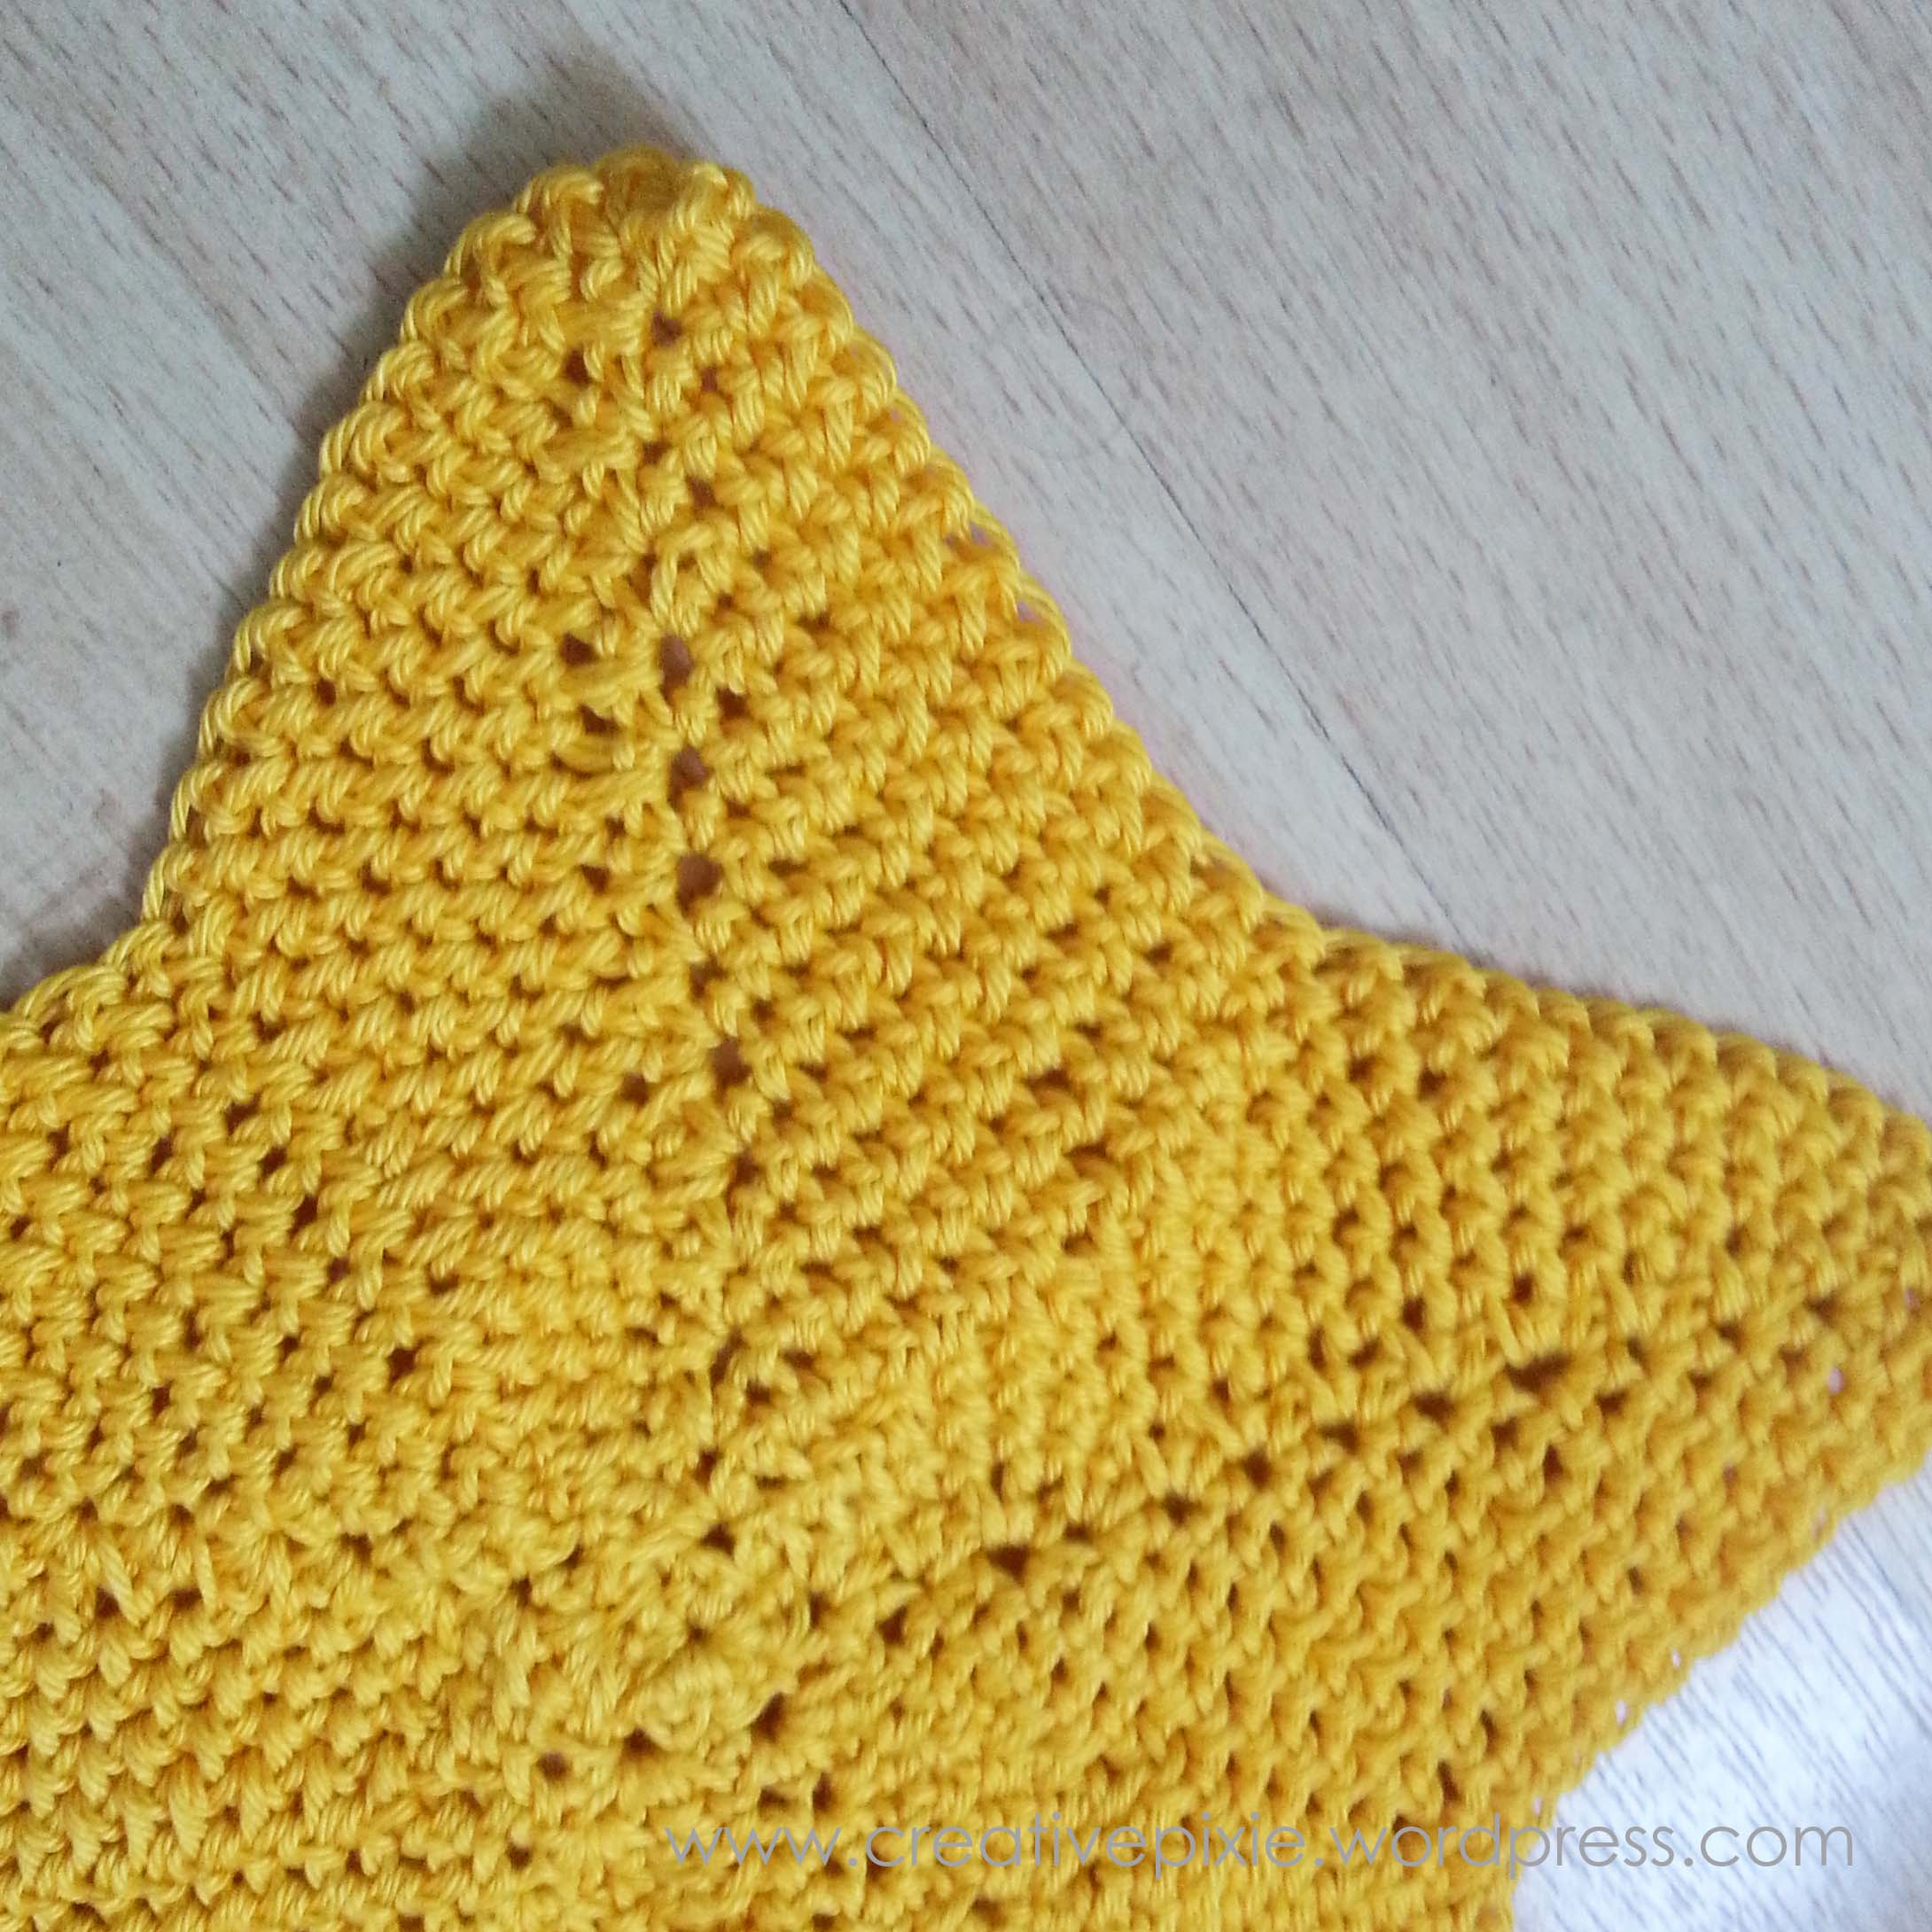 Star Crochet Pattern A Crochet Star Washcloth Pattern The Creative Pixie